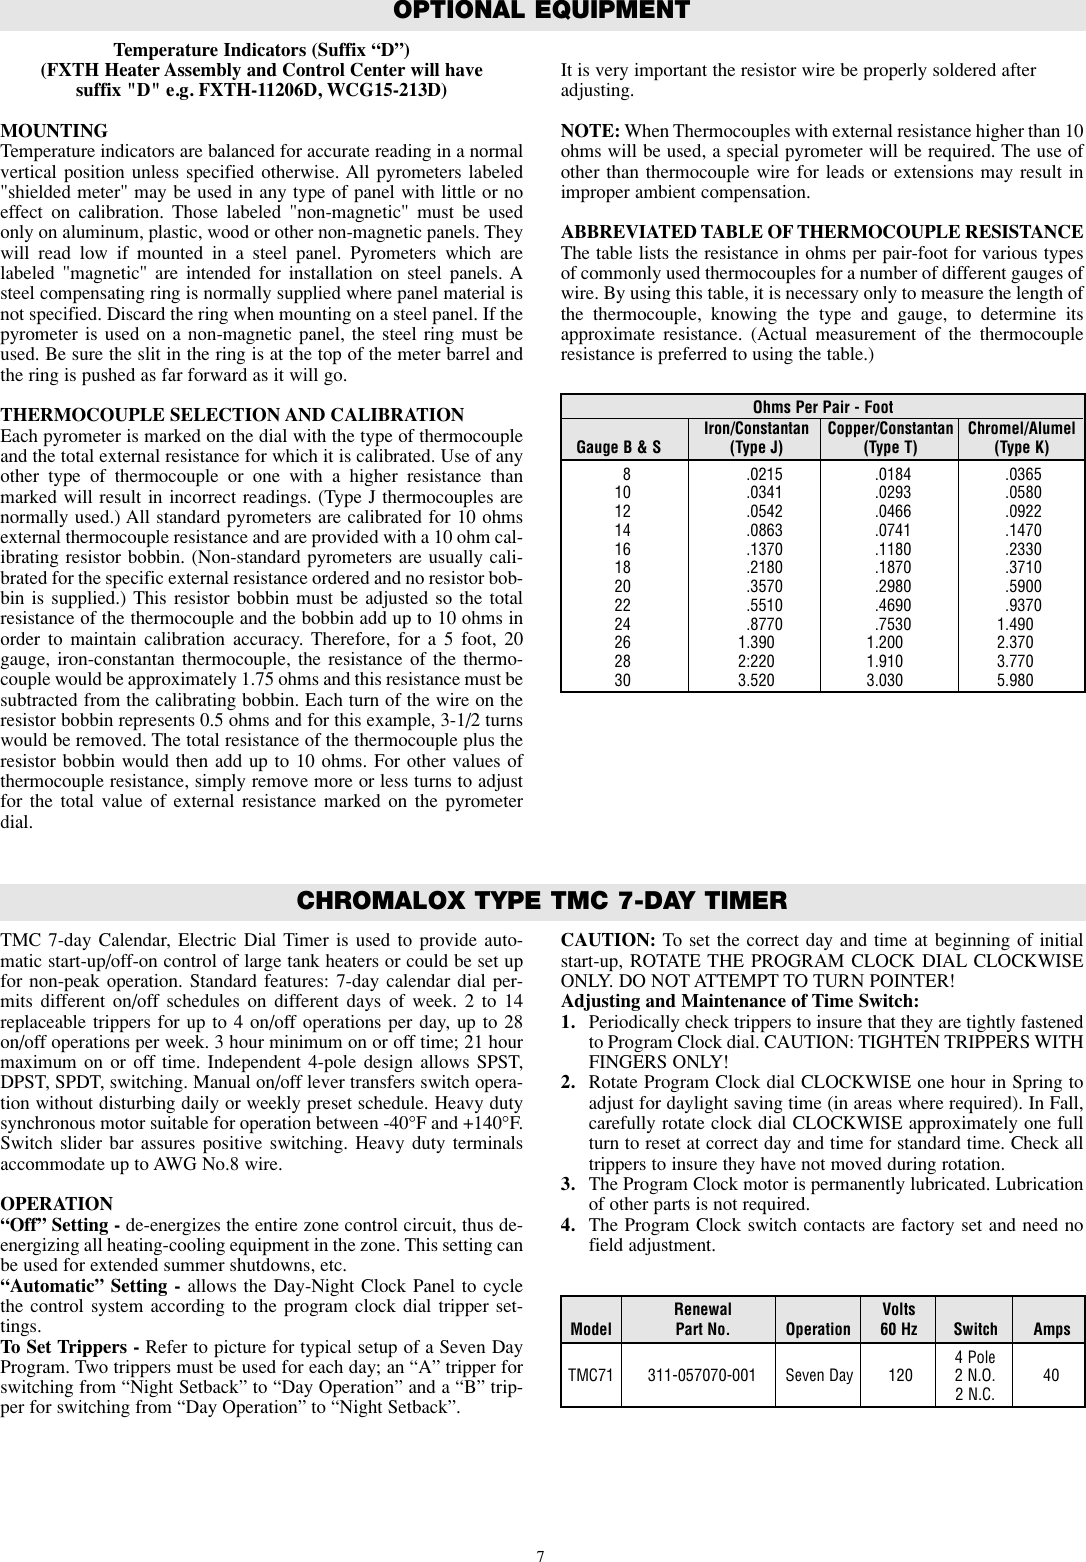 Page 7 of 12 - Chromalox Chromalox-Fxth-Pn401-Users-Manual- PN401 CHX  Chromalox-fxth-pn401-users-manual